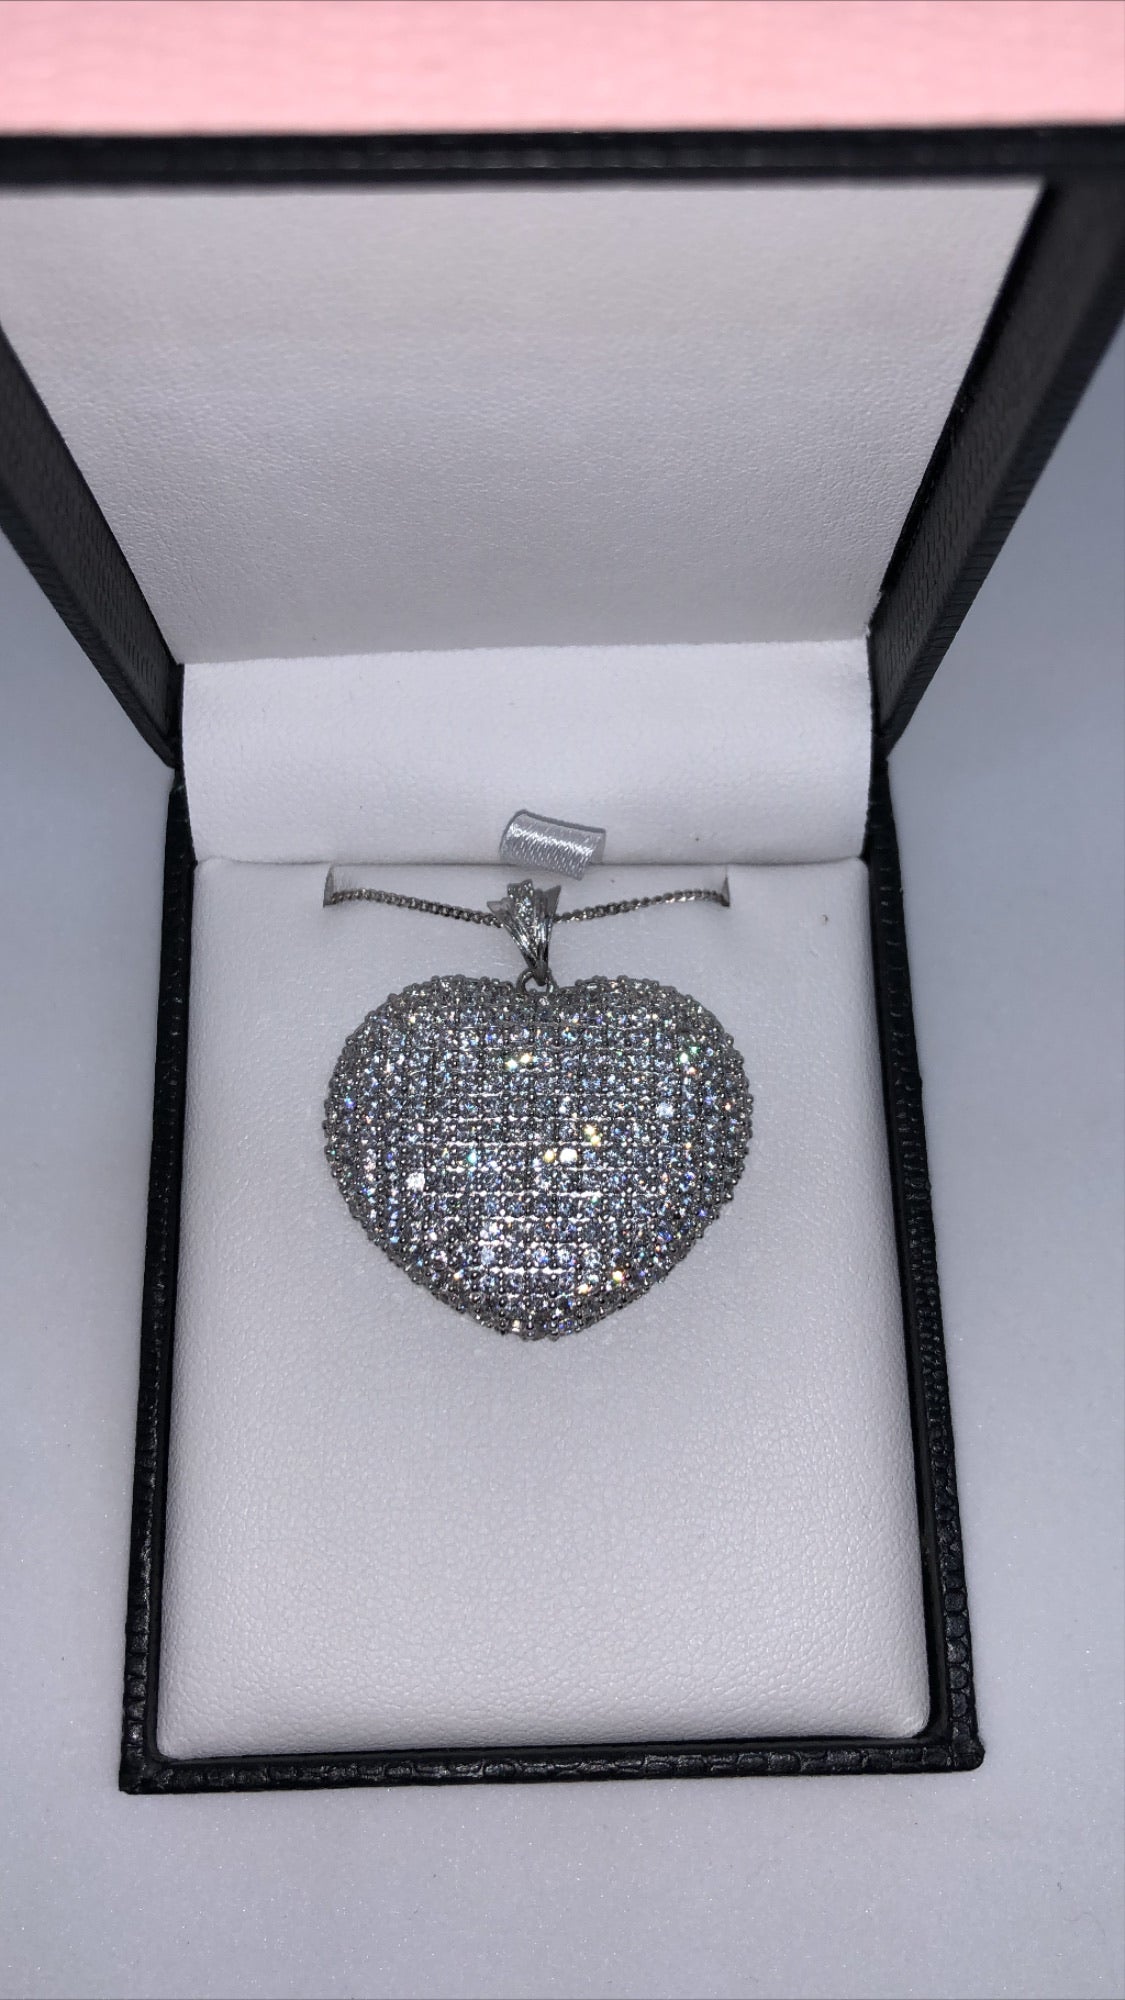 Gabriella paved Heart - London Fifth Avenue jewellery  